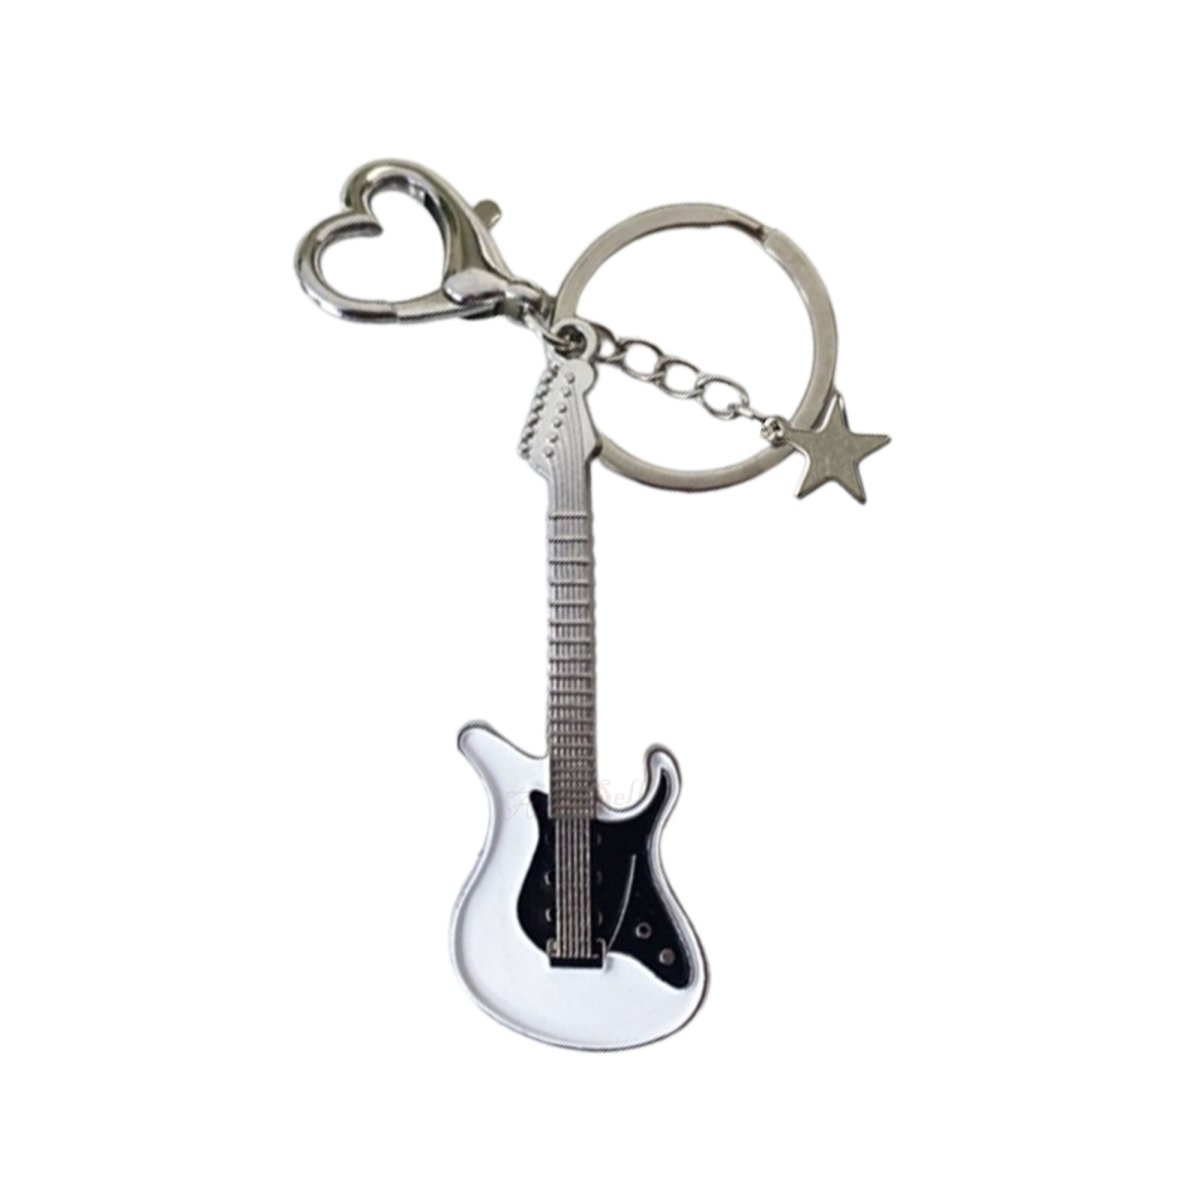 30mm Keyring Guitar Keychain 7.5cm Key Ring Key Chain Bag Accessory Holder Pendant Tag - White Black Star Heart - - Asia Sell